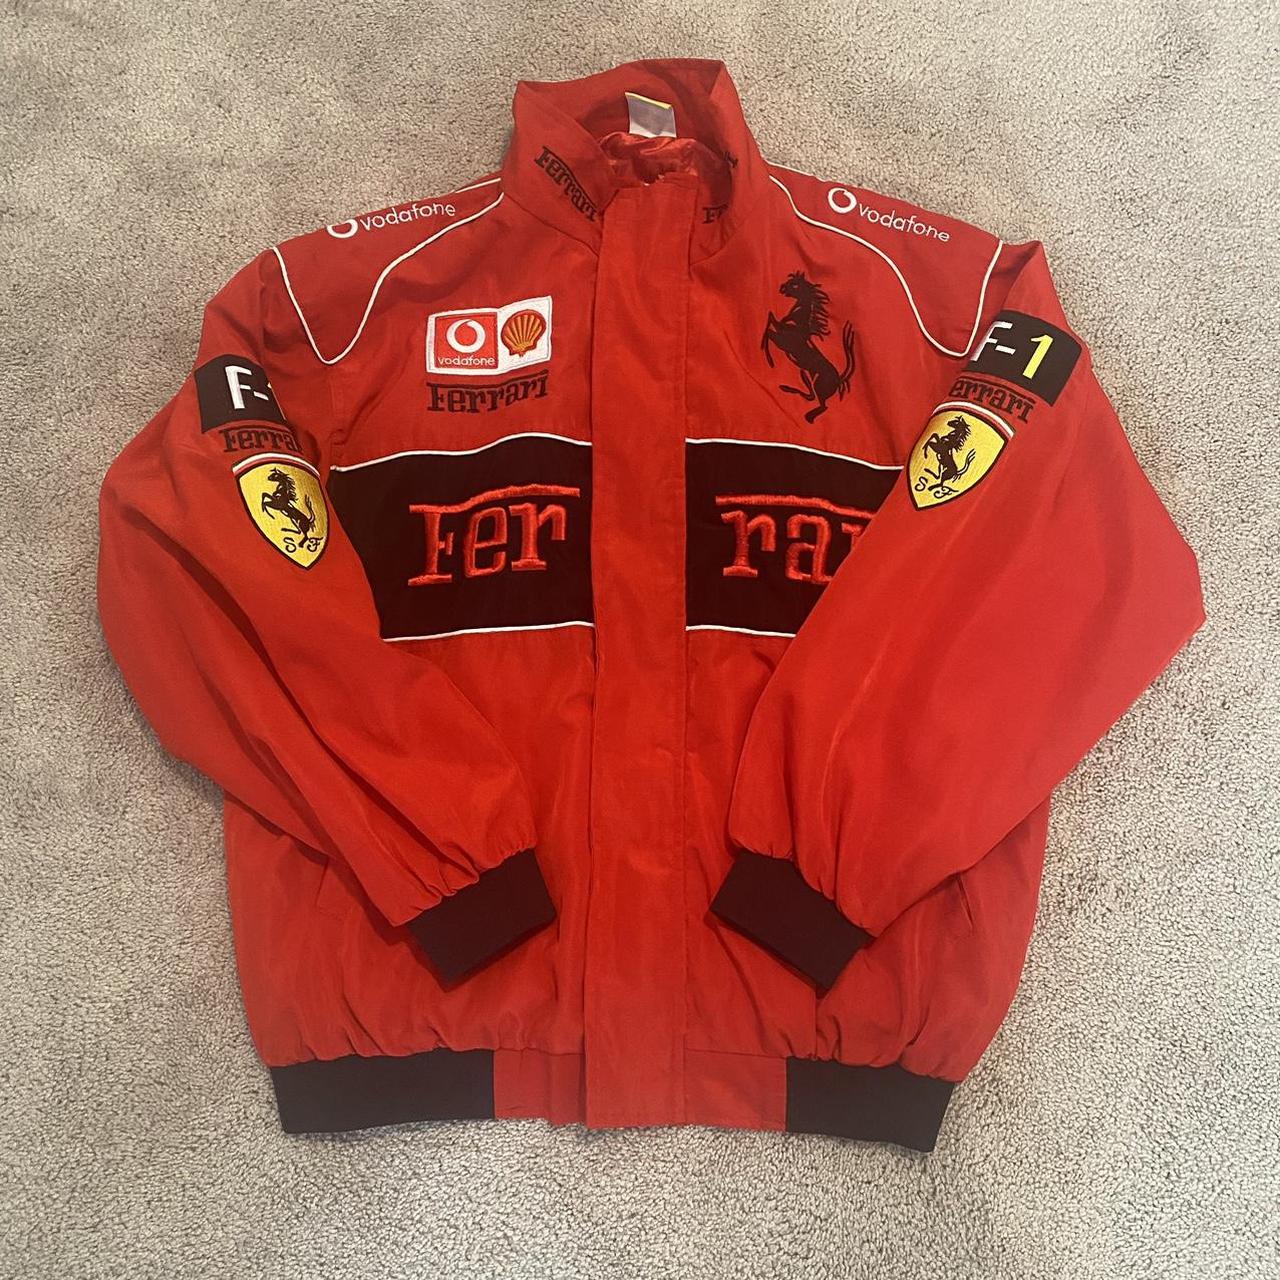 Ferrari Men's Red and Black Jacket